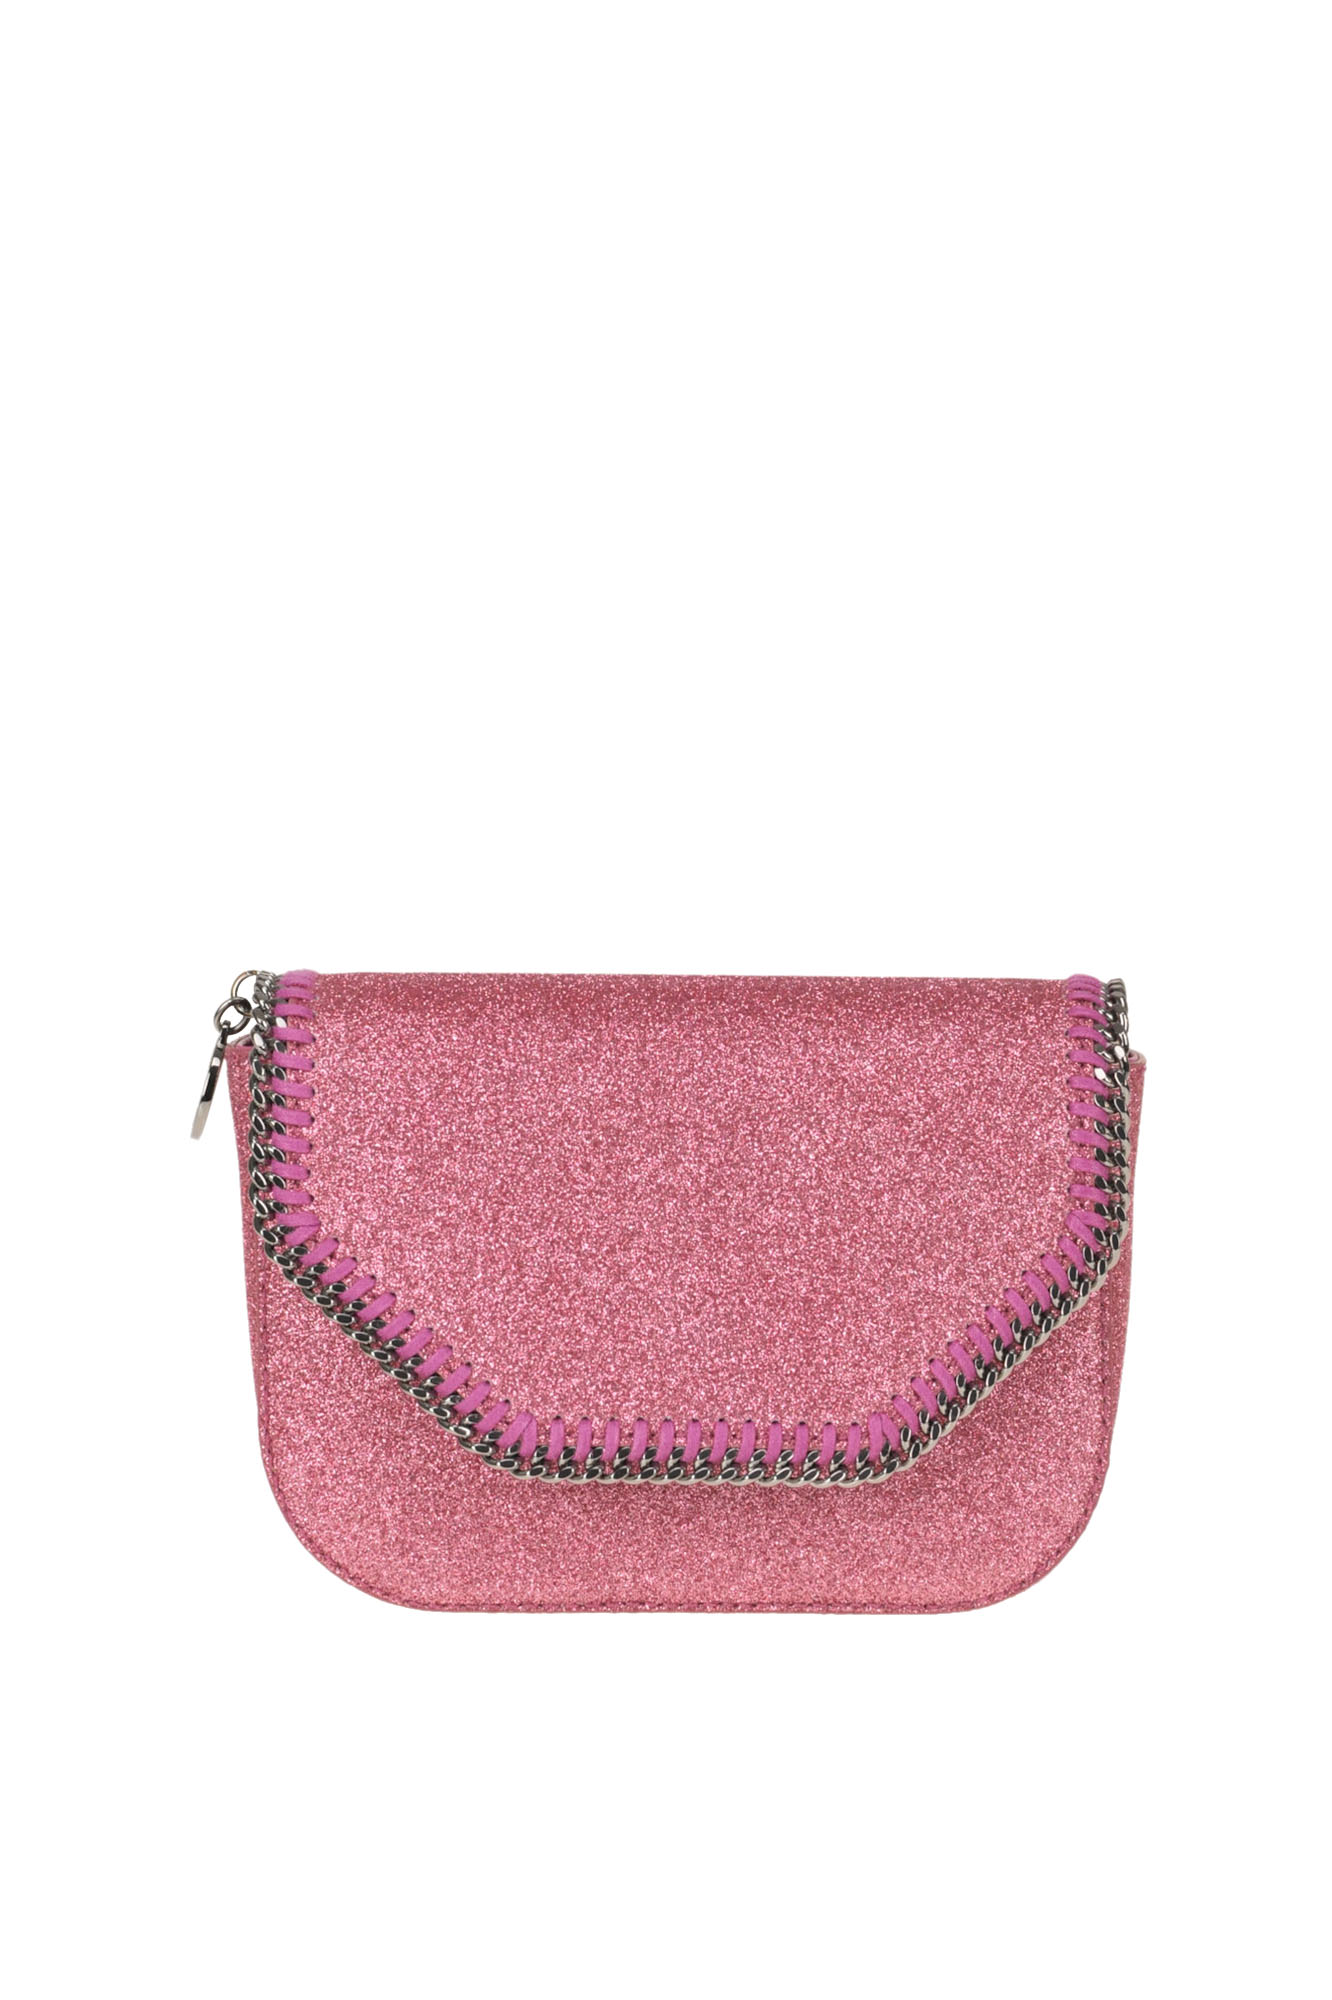 Stella Mccartney 'falabella' Glittered Mini Bag In Shocking Pink | ModeSens